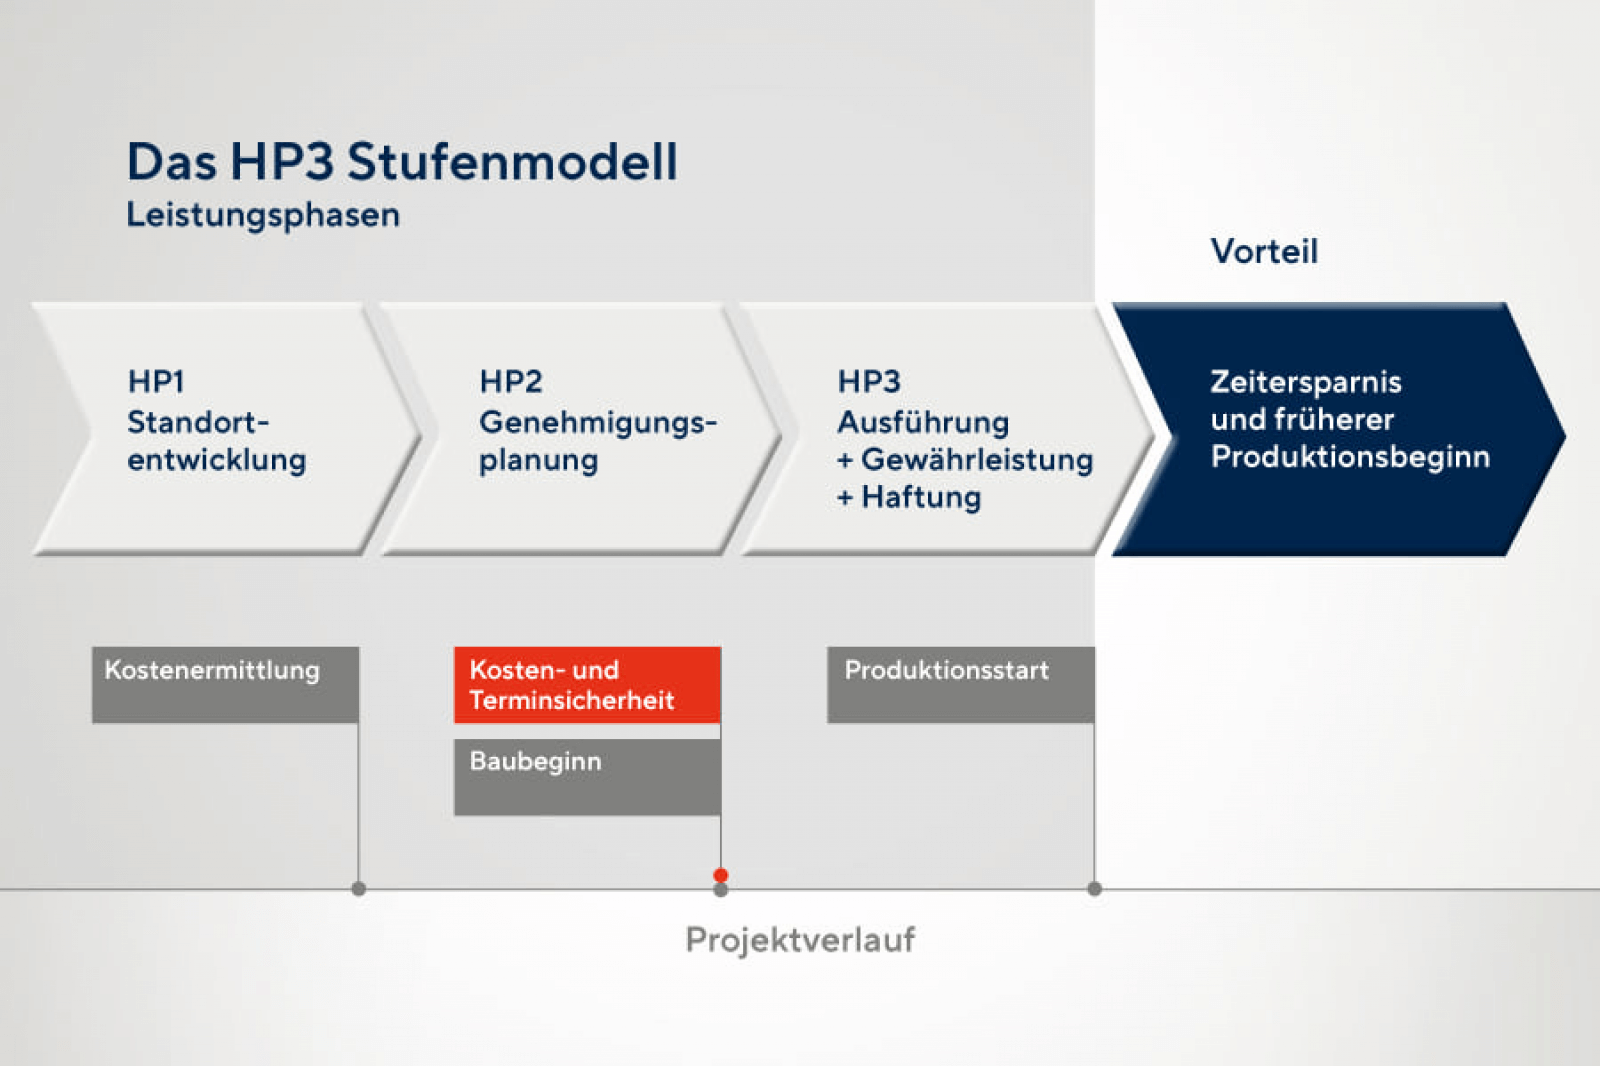 HP3 Stufenmodell